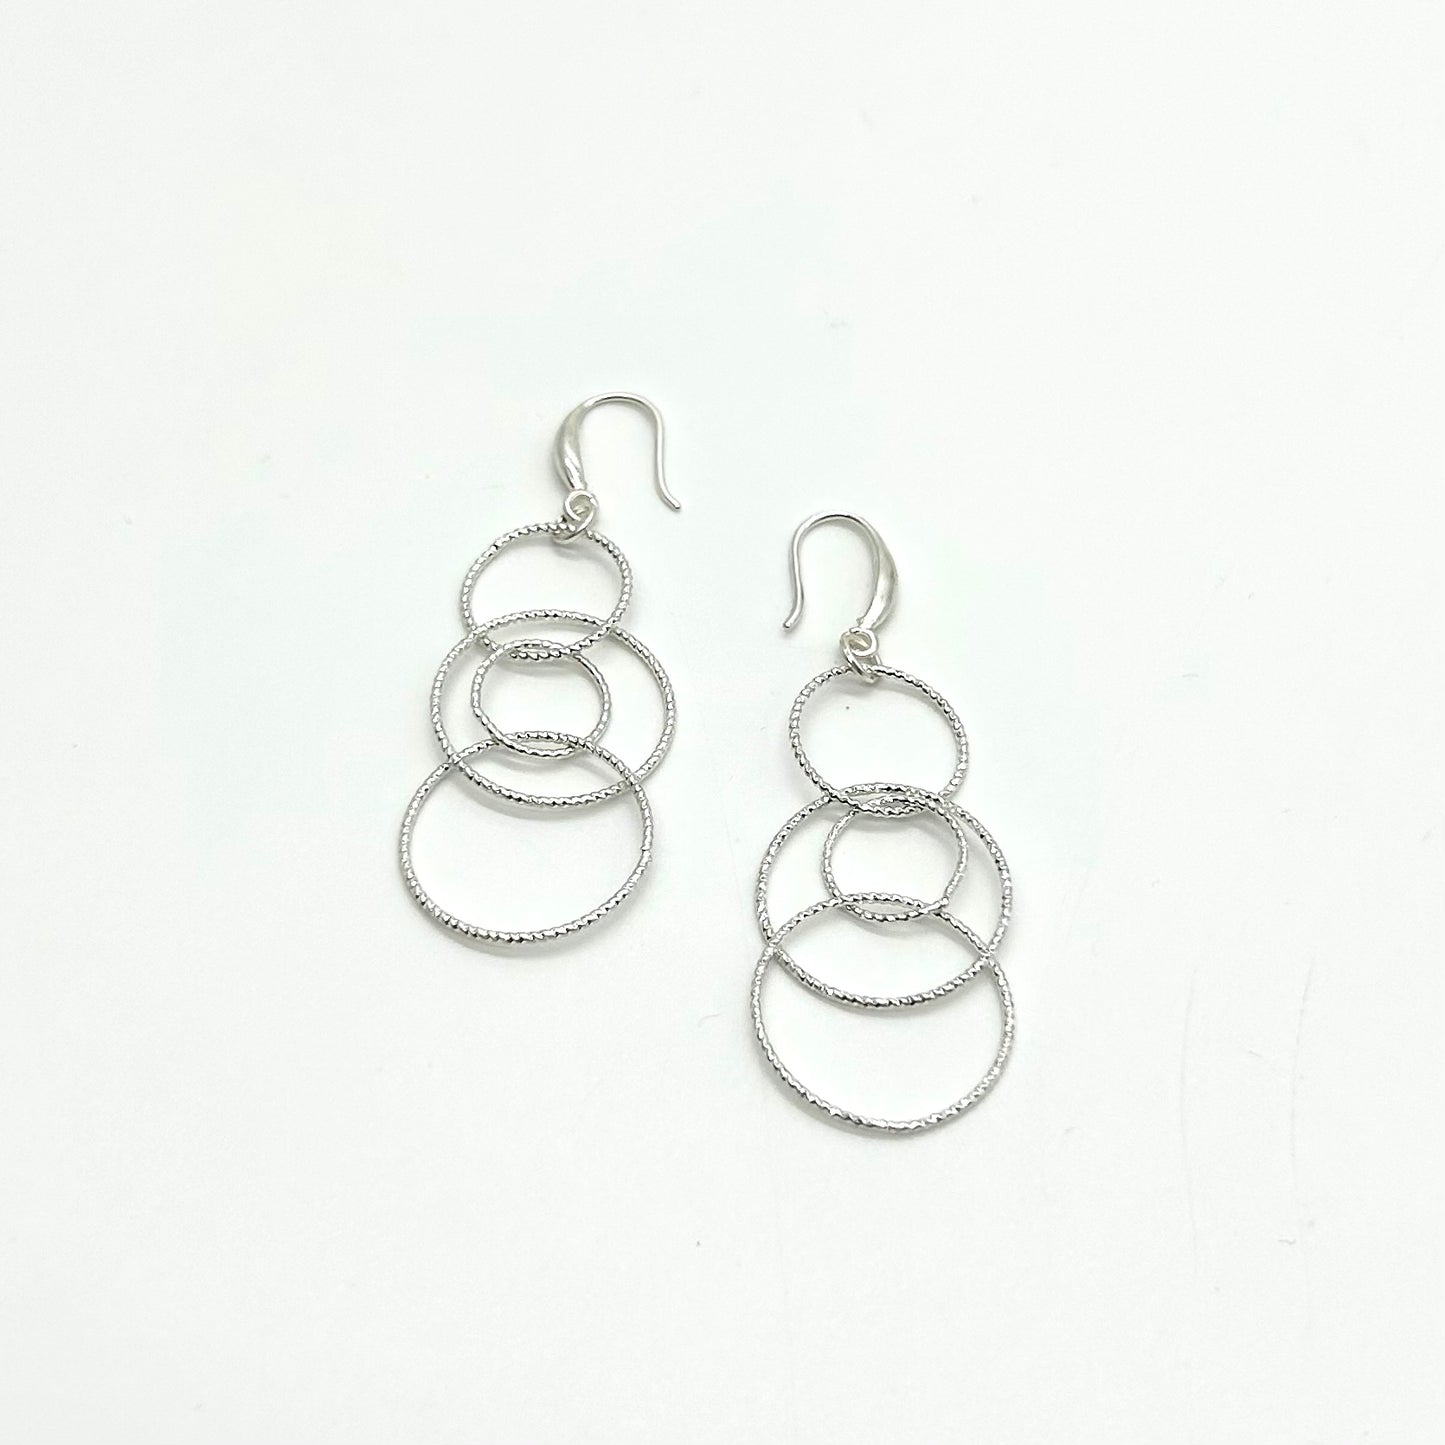 Twisted Ring Drop Earrings